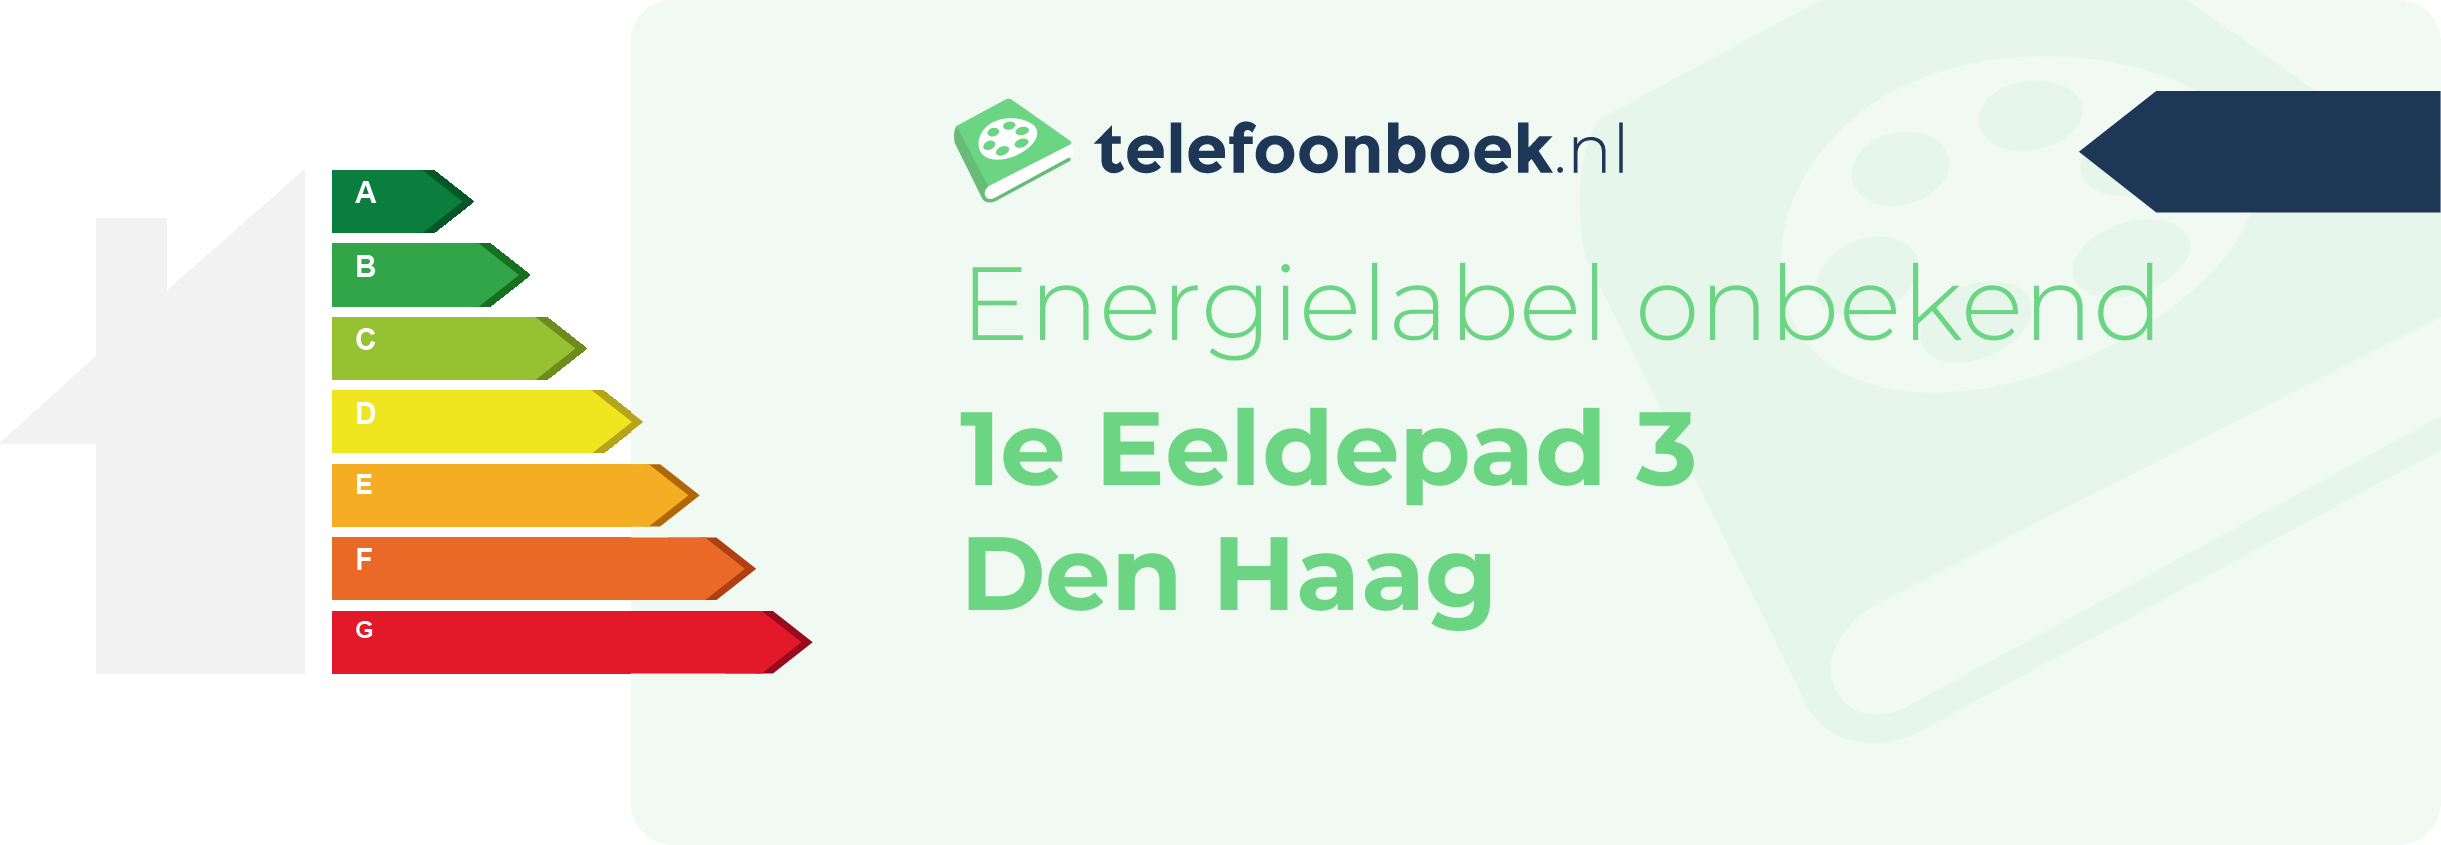 Energielabel 1e Eeldepad 3 Den Haag